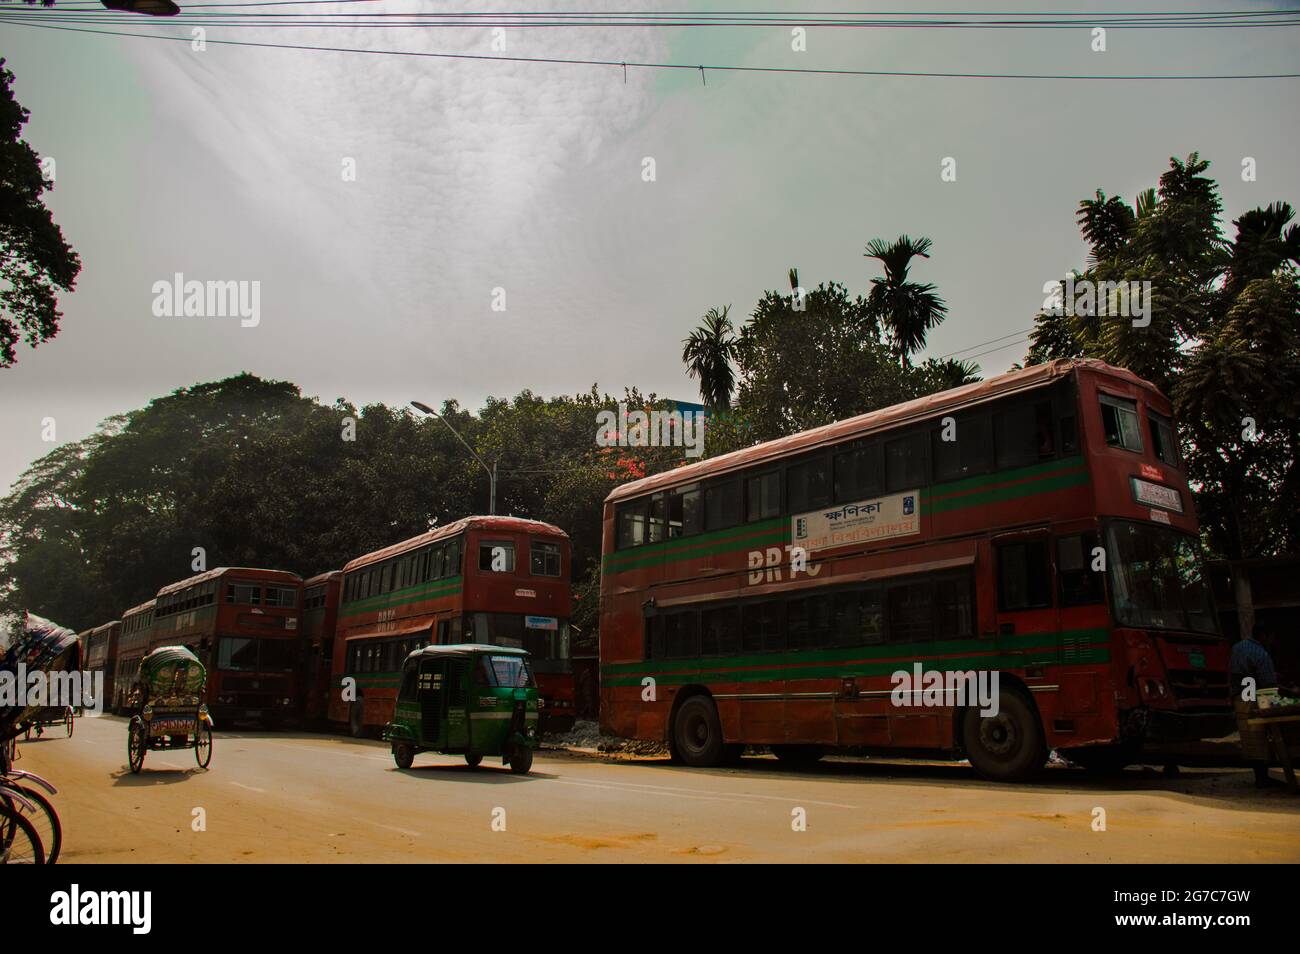 Red busses of dhaka university Stock Photo